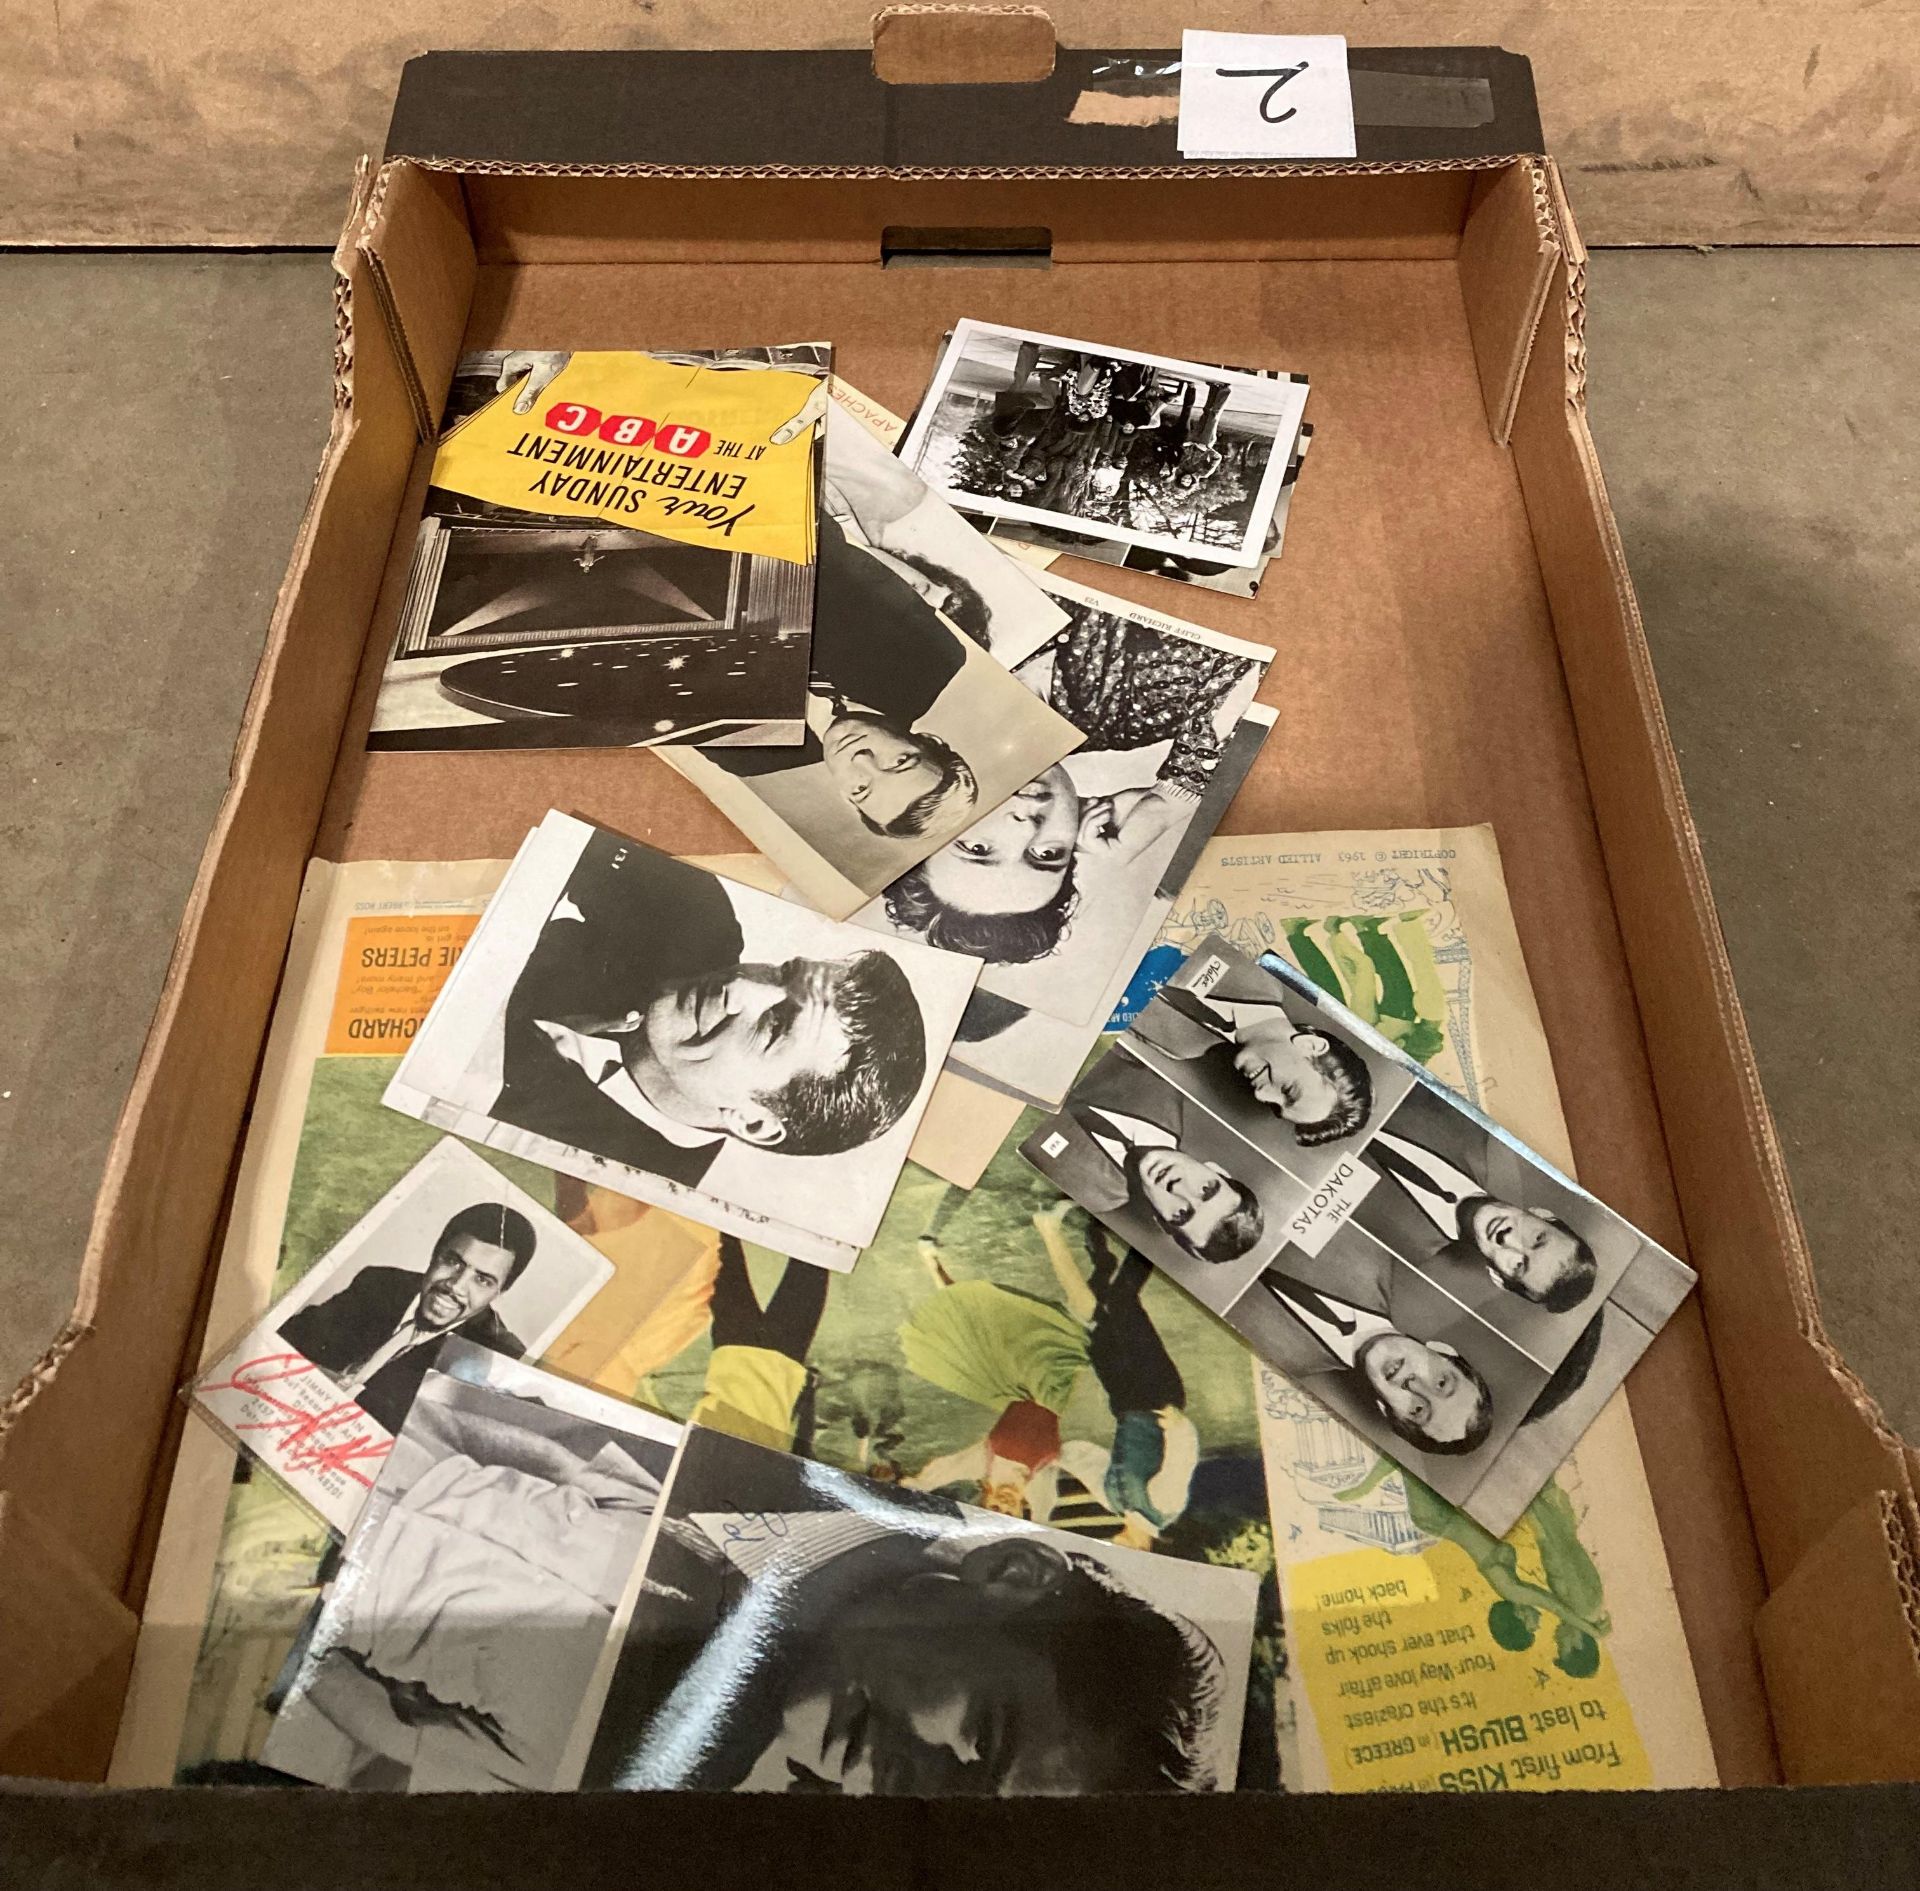 A Collection of 1960s onwards pop memorabilia - Beatles, Monkees, Helen Shapiro, - Image 4 of 6